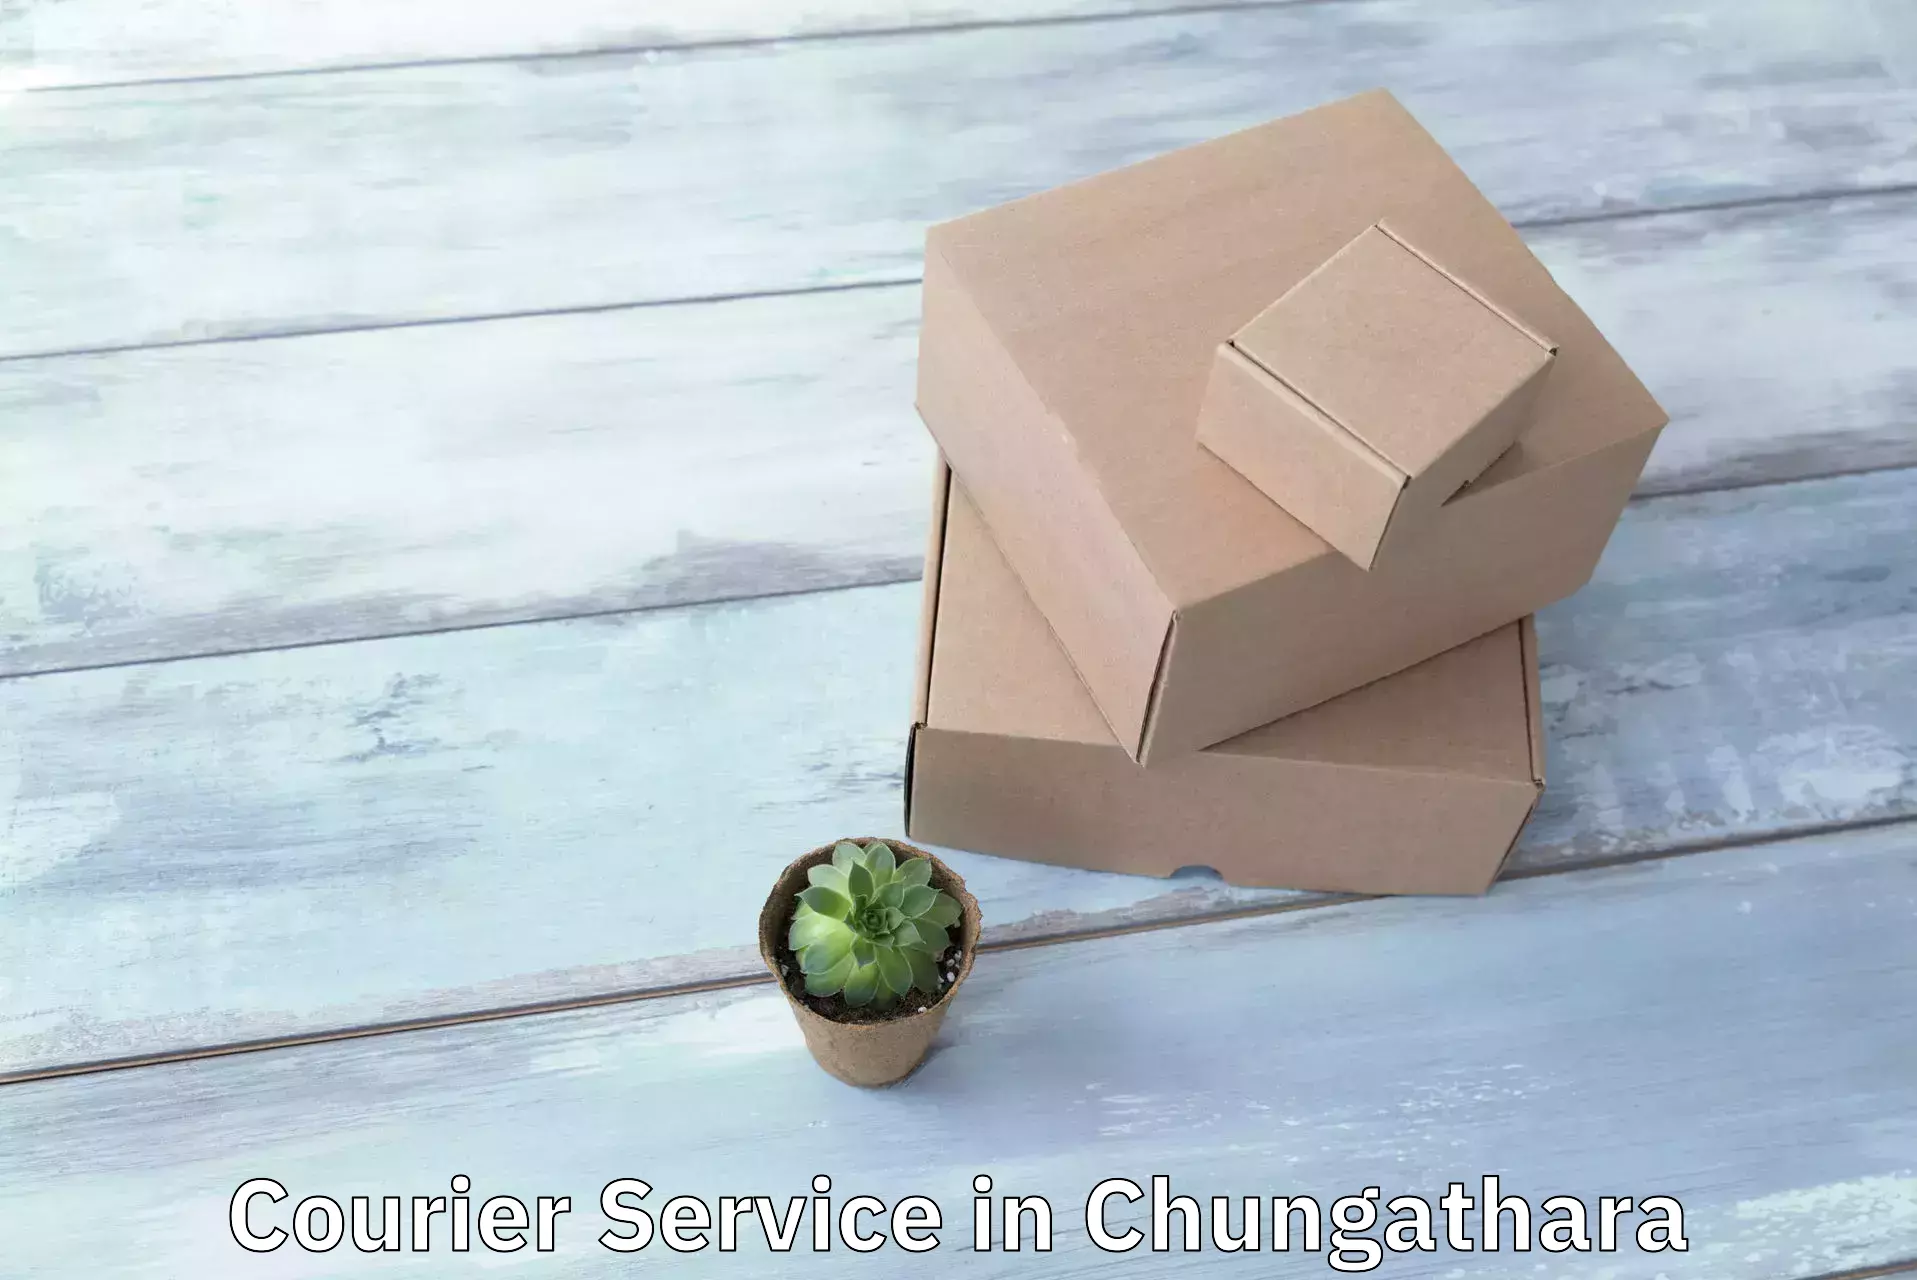 Effective logistics strategies in Chungathara